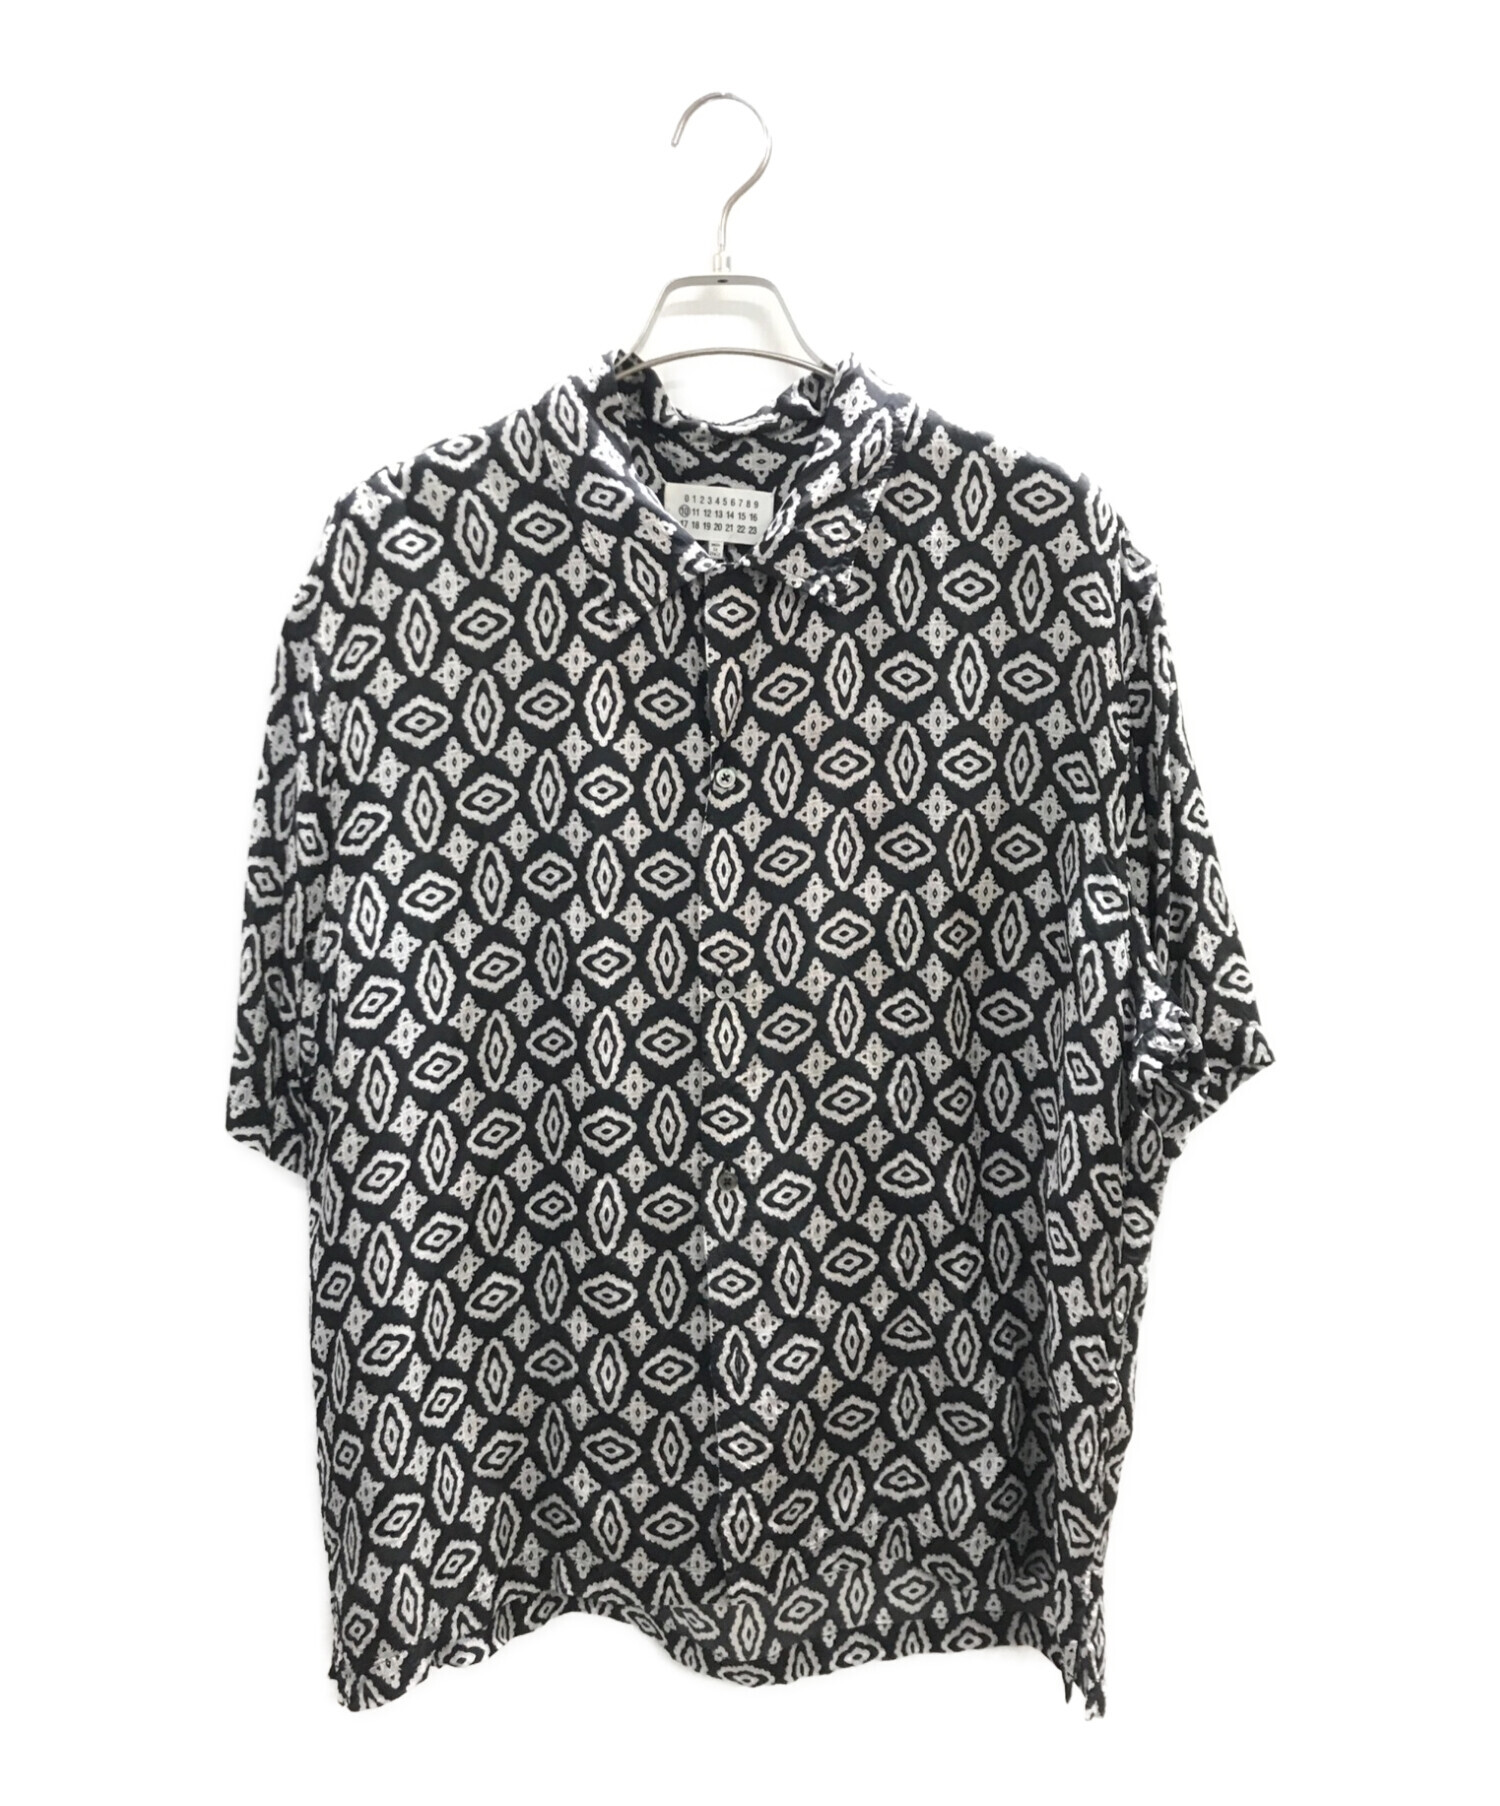 Maison Margiela (メゾンマルジェラ) Short Sleeve Printed Shirt ブラック サイズ:42